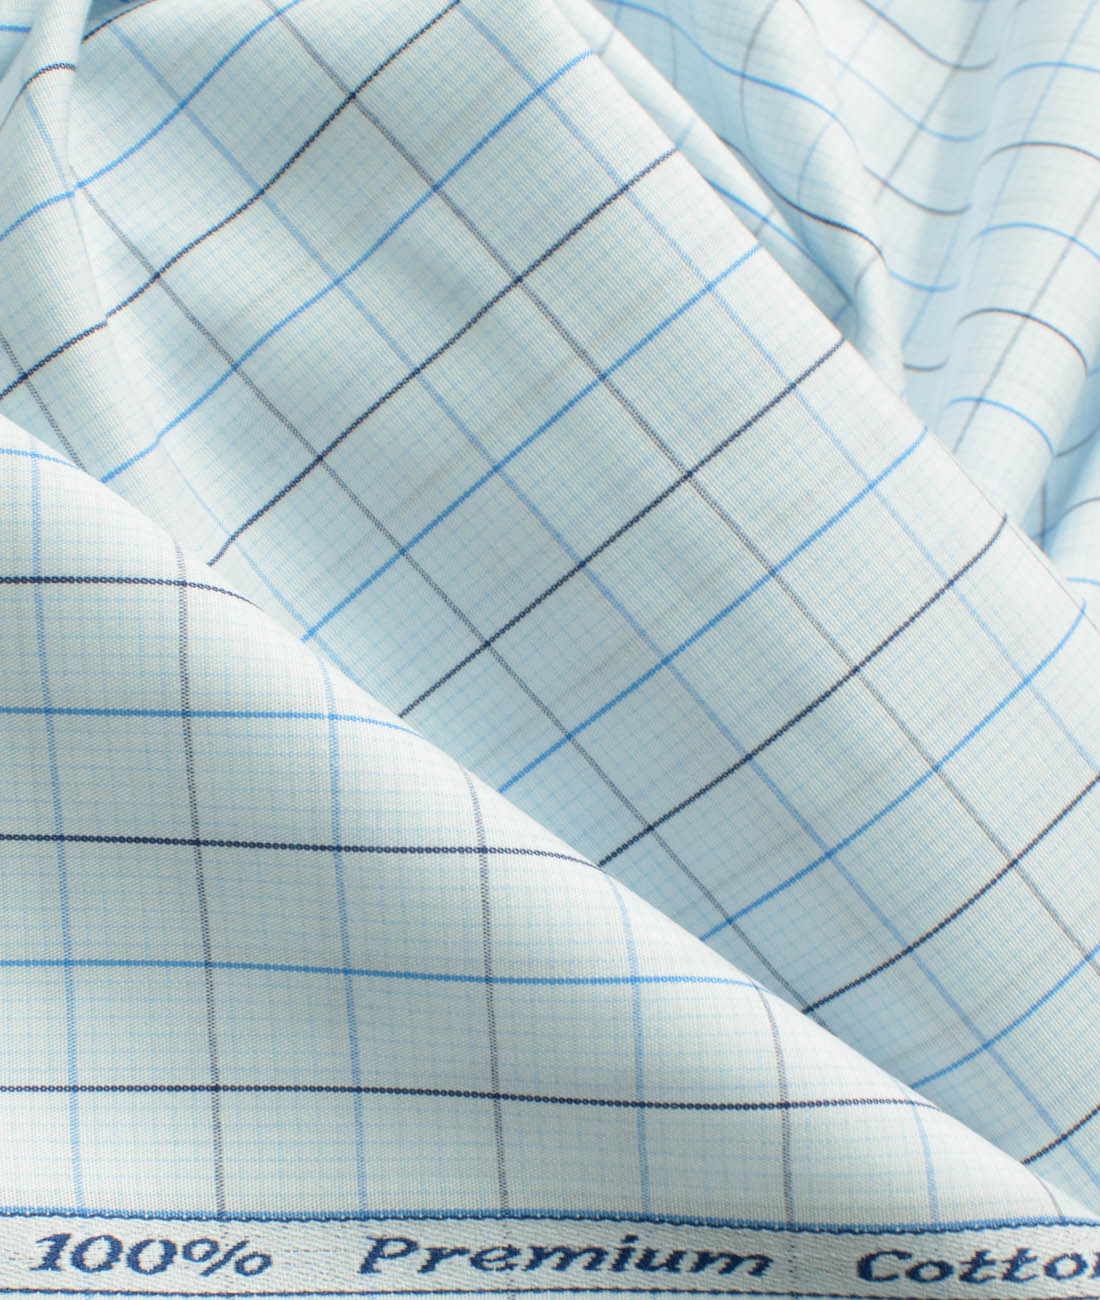 Arvind Men's 60's Premium Cotton Checks 2.25 Meter Unstitched Shirting Fabric (White & Blue)